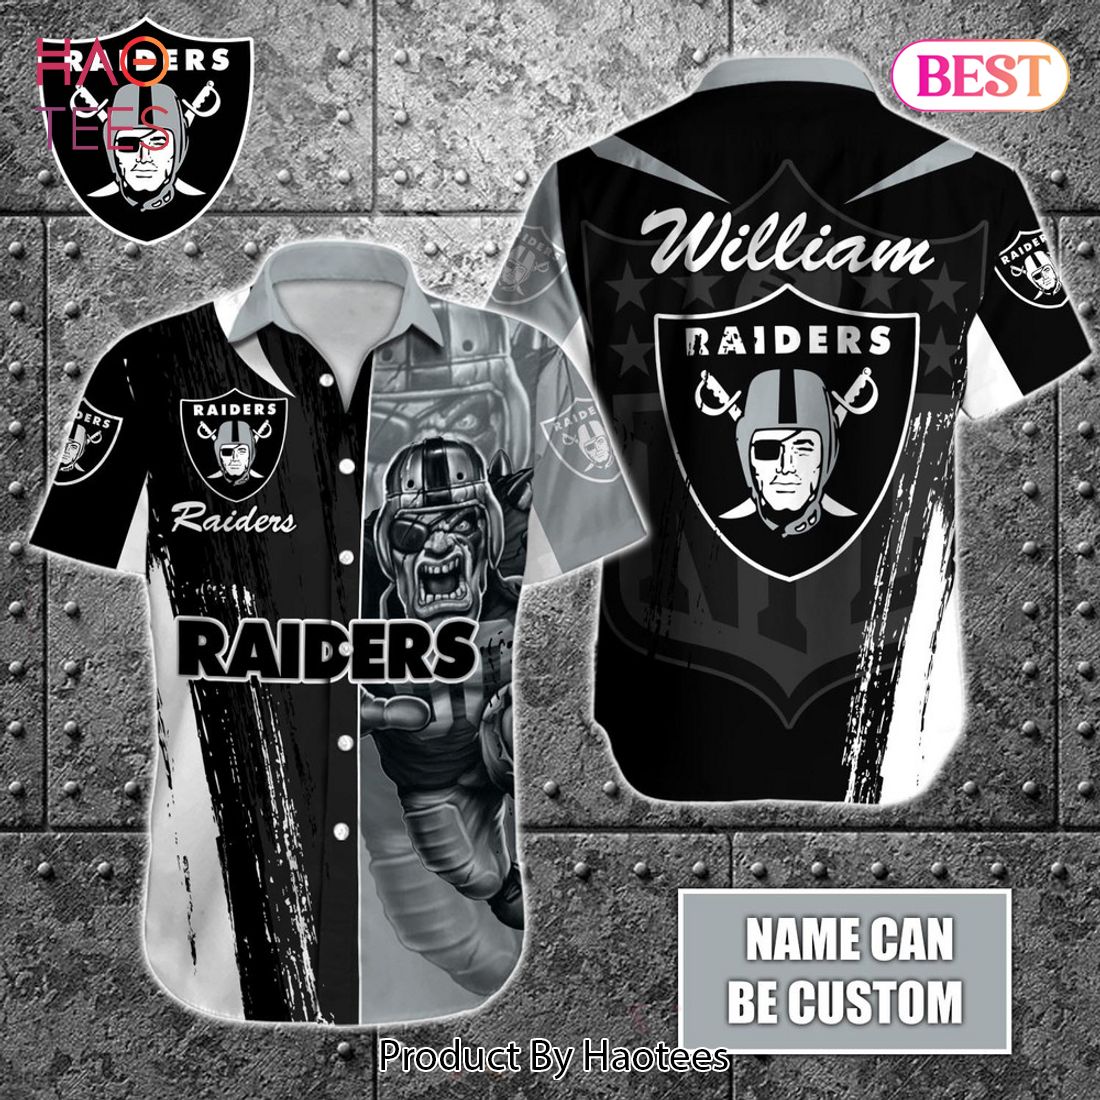 Las Vegas Raiders jersey design